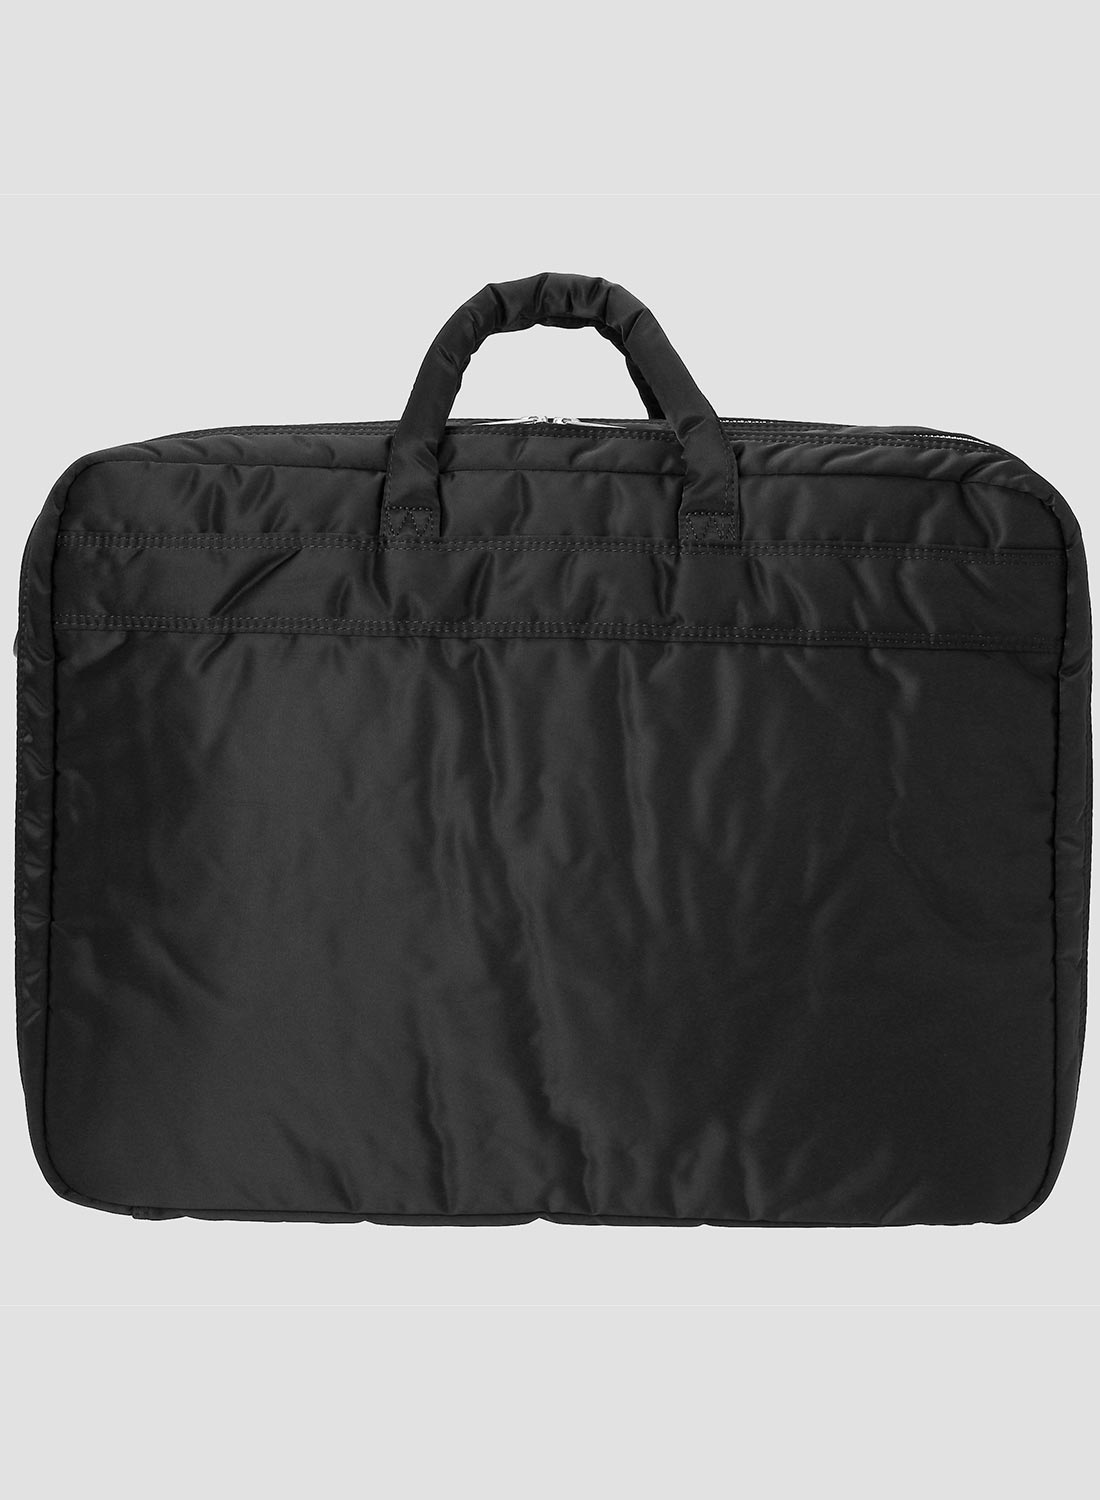 Porter-Yoshida & Co Tanker 2Way Overnight Briefcase in Black